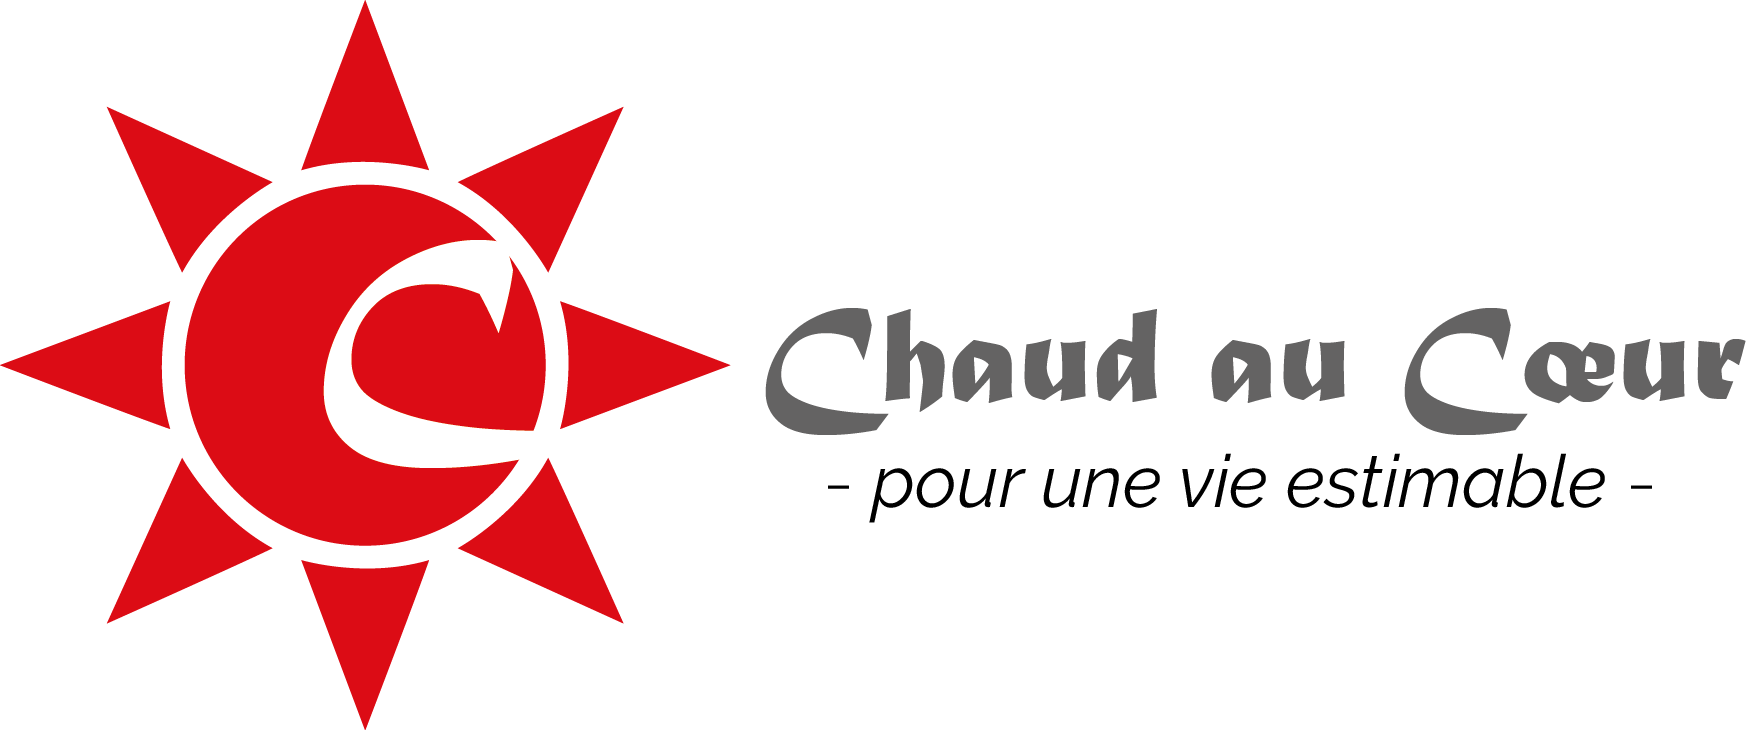 chaudaucoeur logo